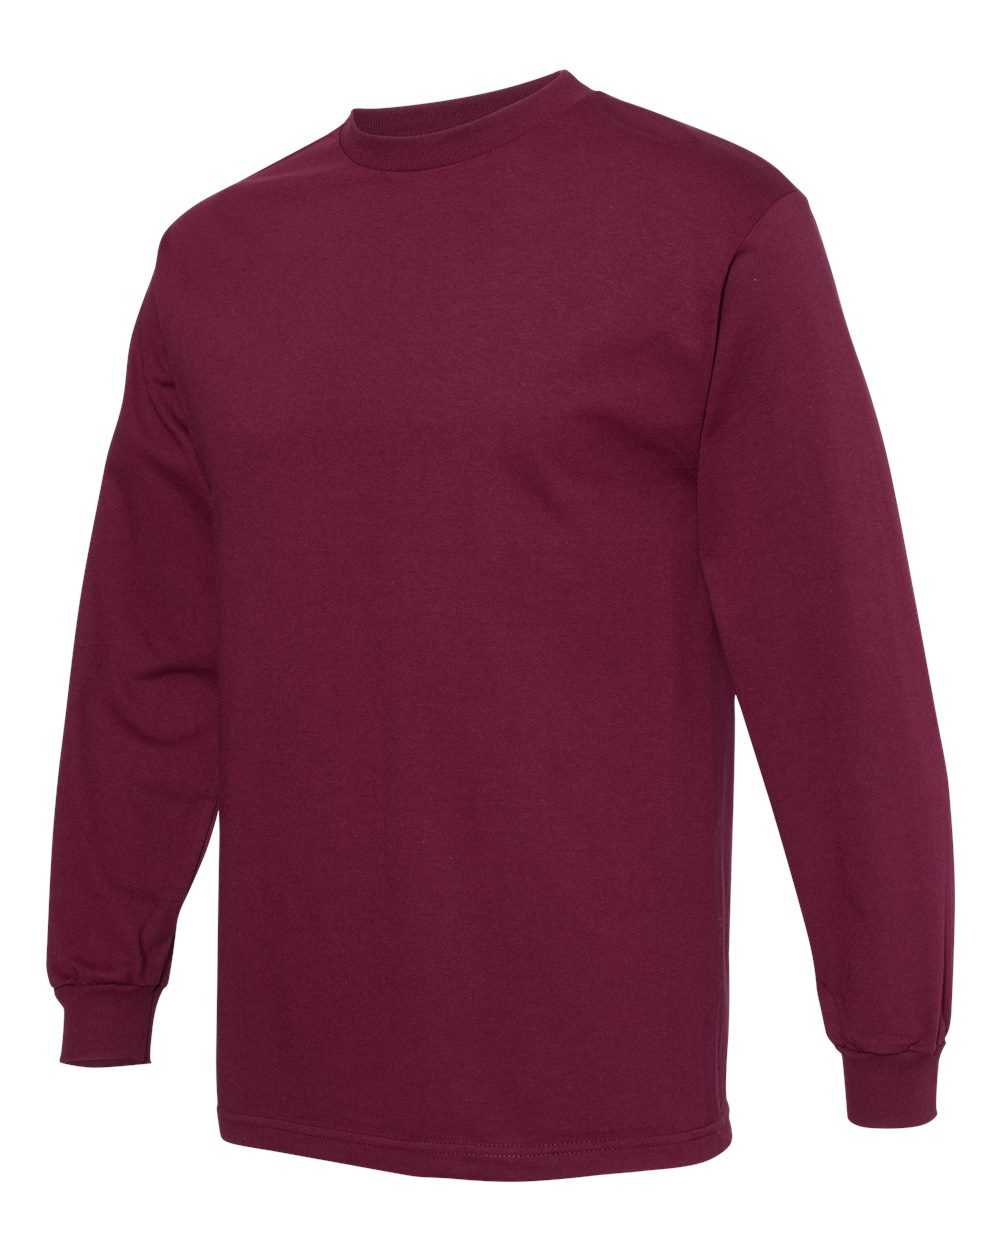 American Apparel 1304 Unisex Heavyweight Cotton Long Sleeve T-Shirt - Burgundy - HIT a Double